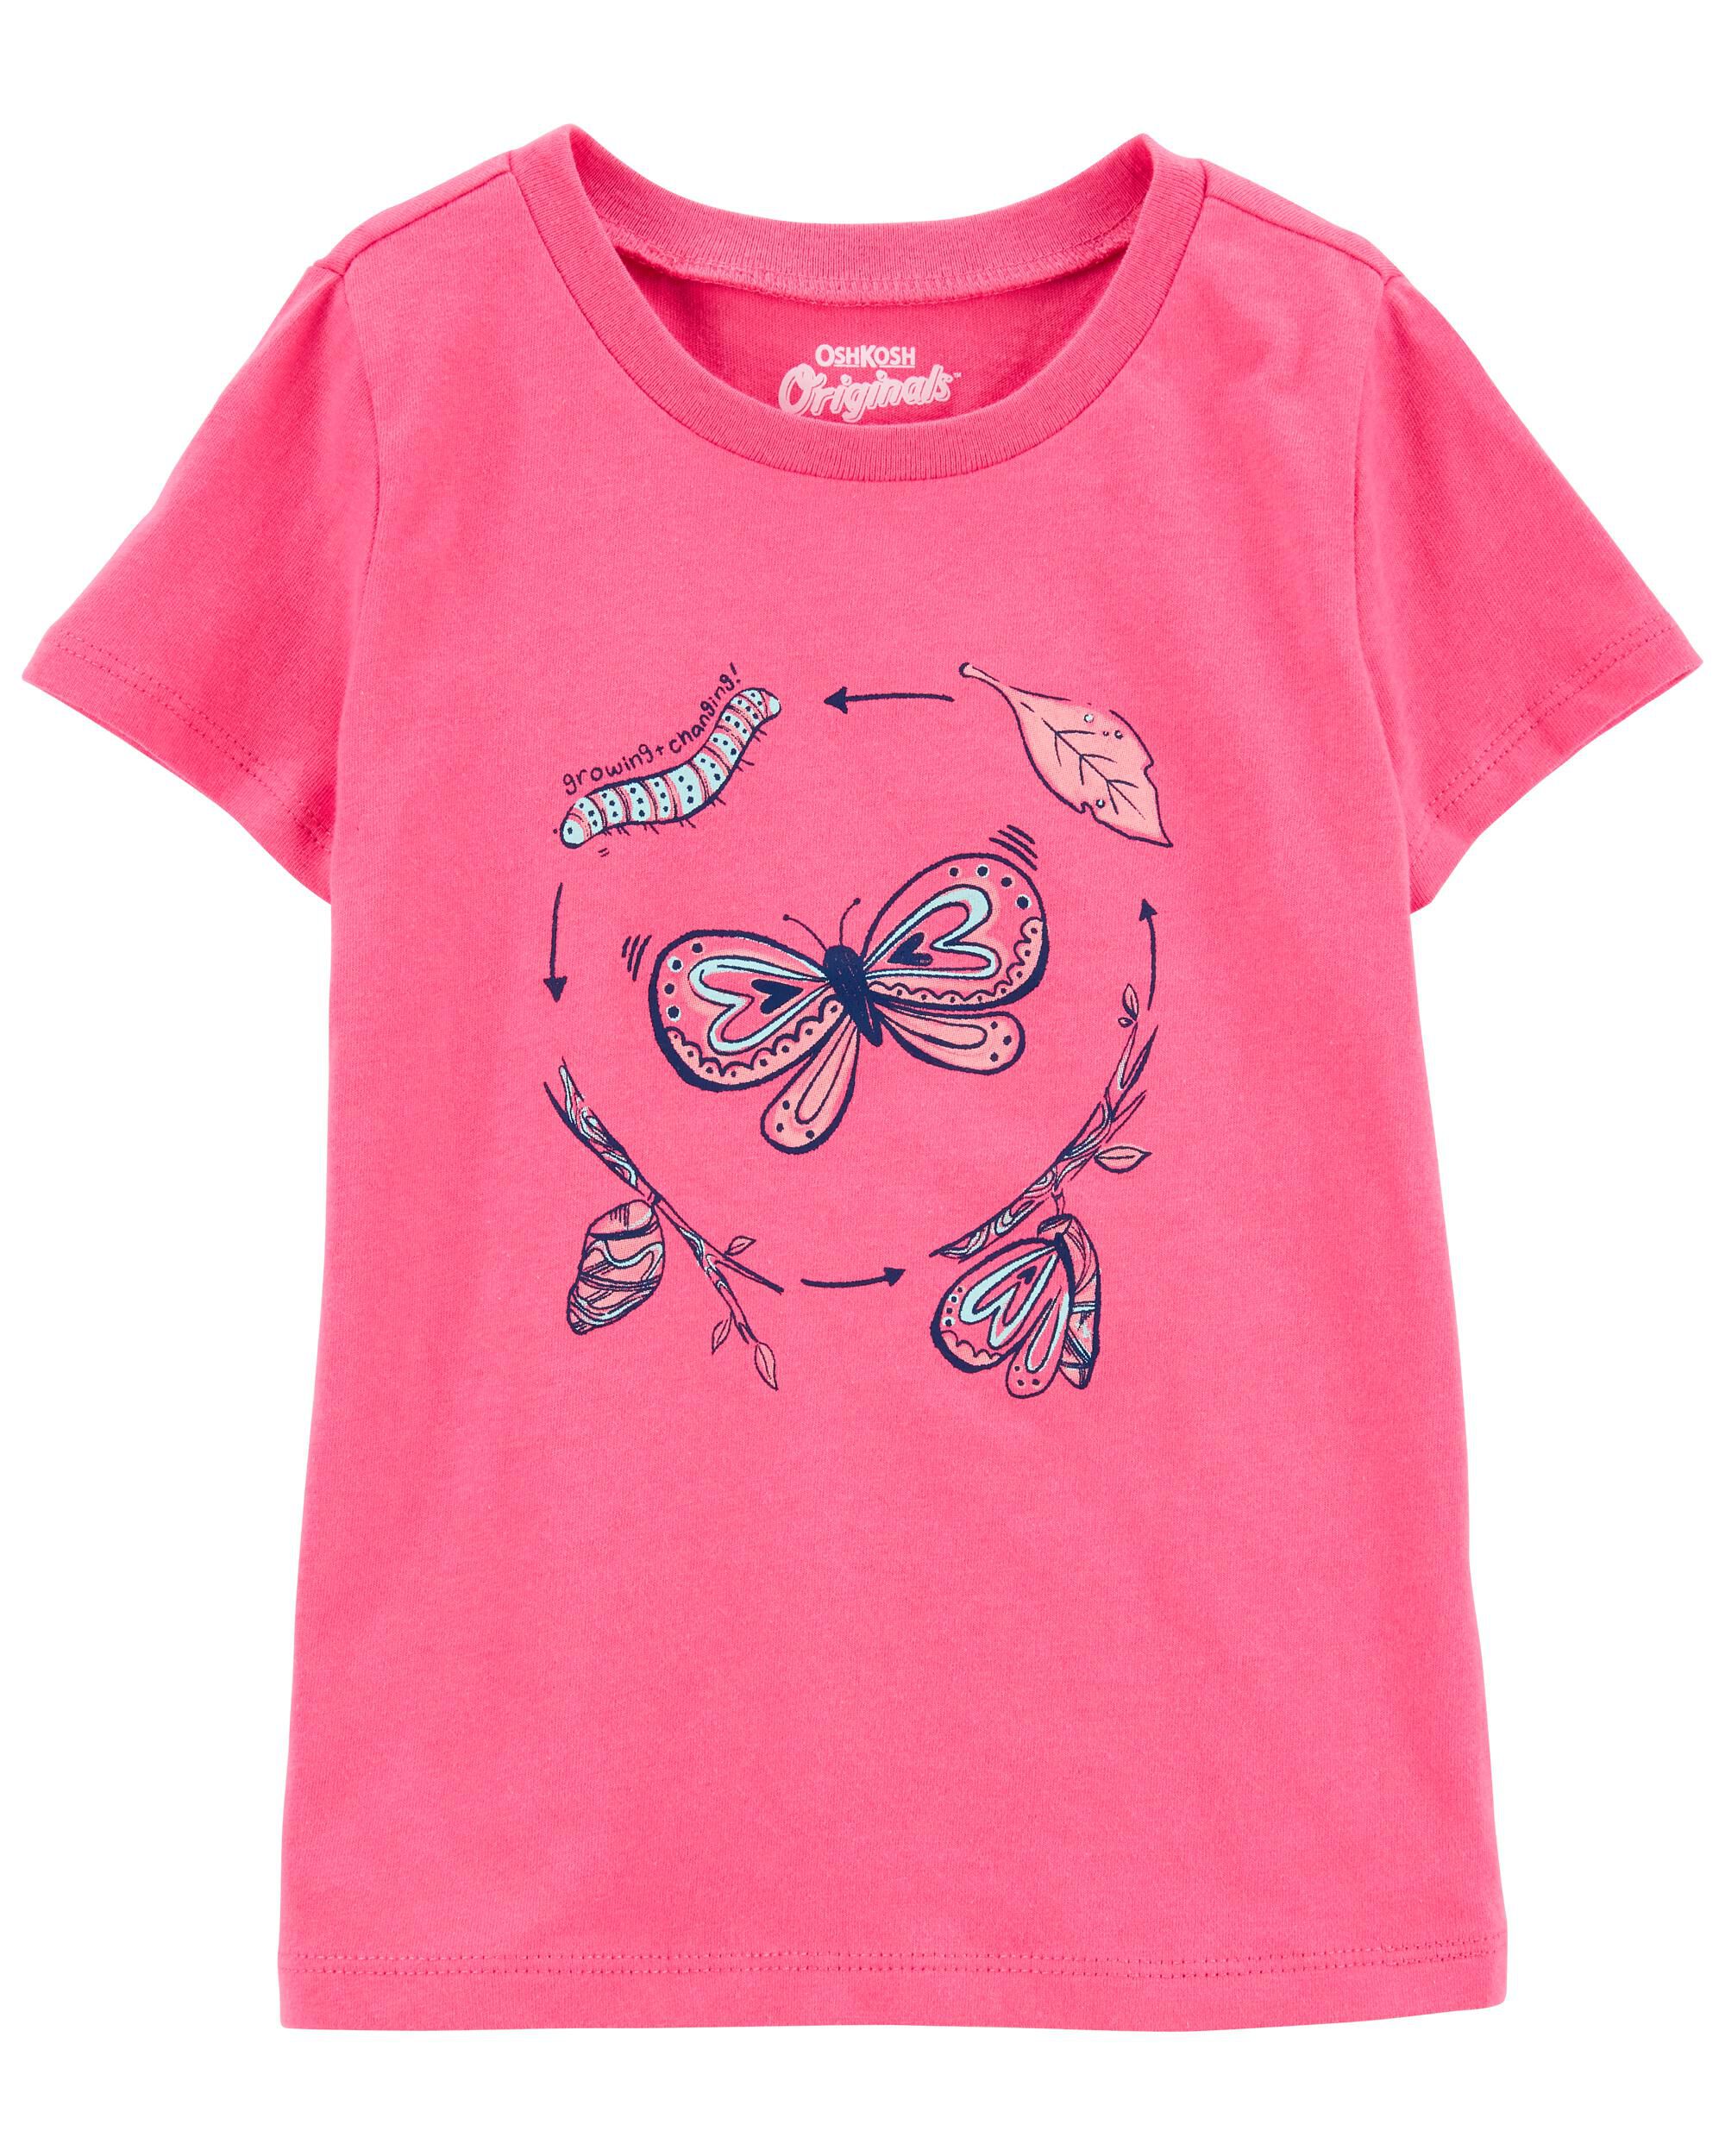 4T Genuine Kids By OshKosh Girls Aqua Flutter Tee & Pink Floral Pant Set 